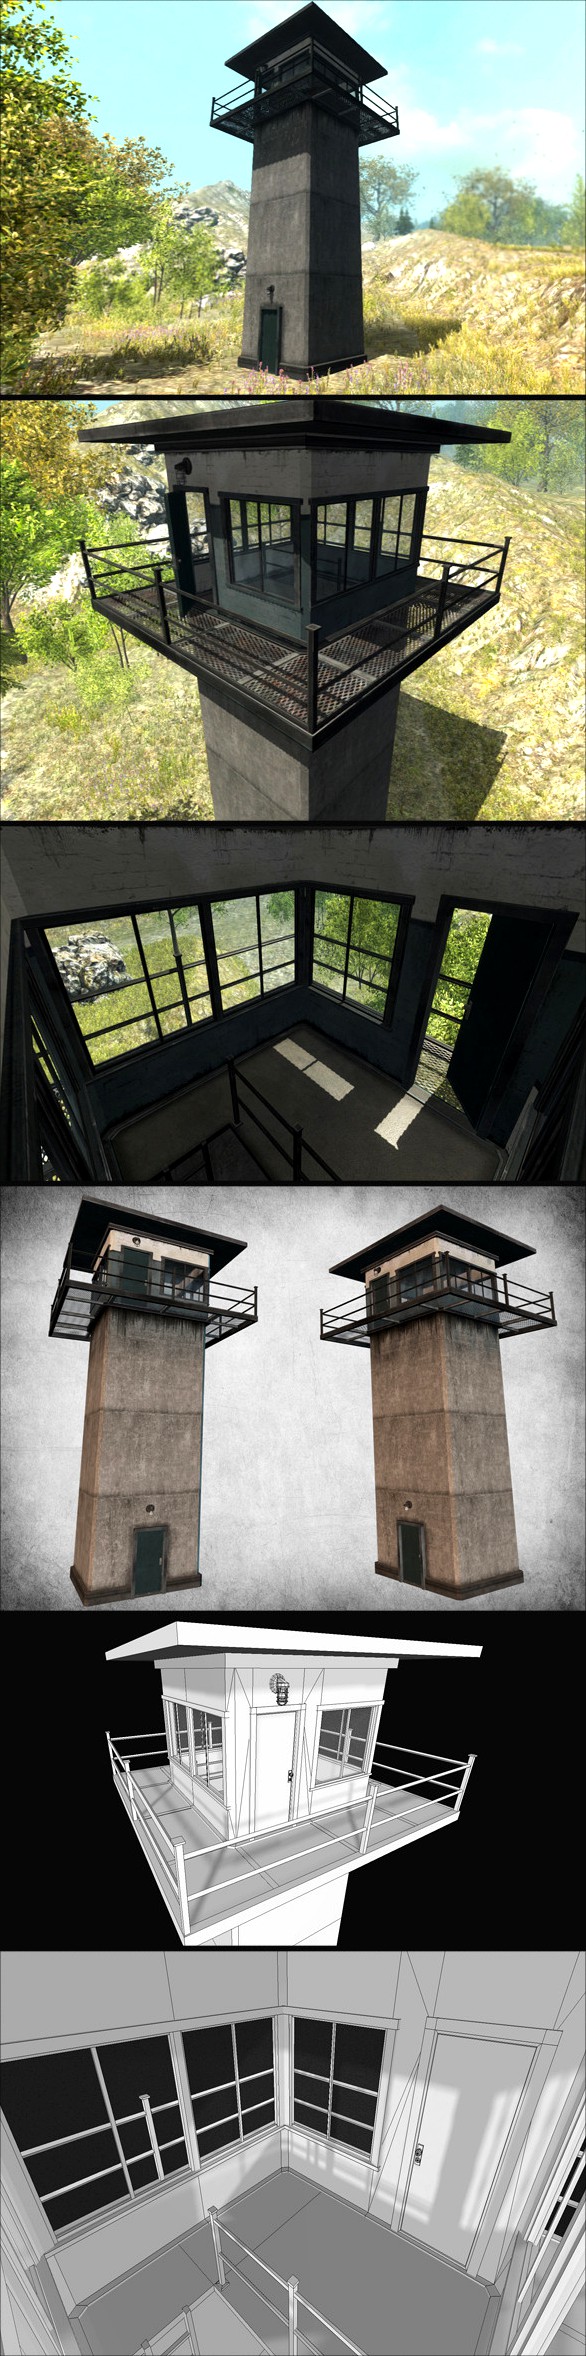 Prison Tower